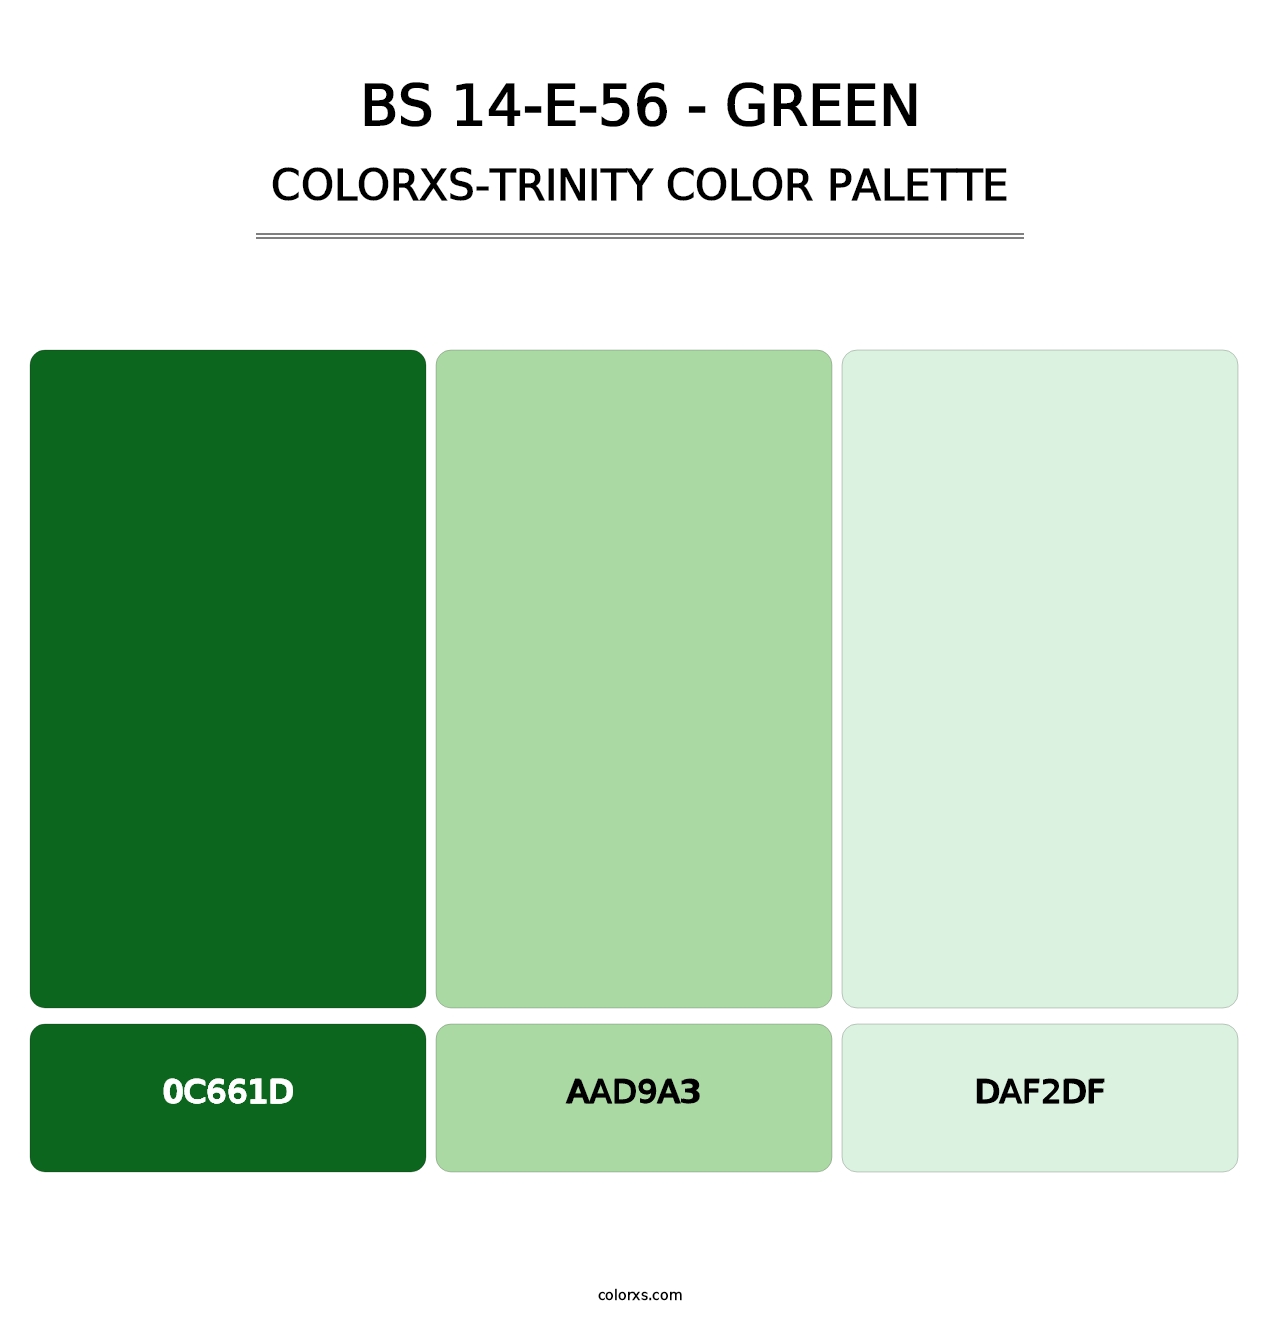 BS 14-E-56 - Green - Colorxs Trinity Palette